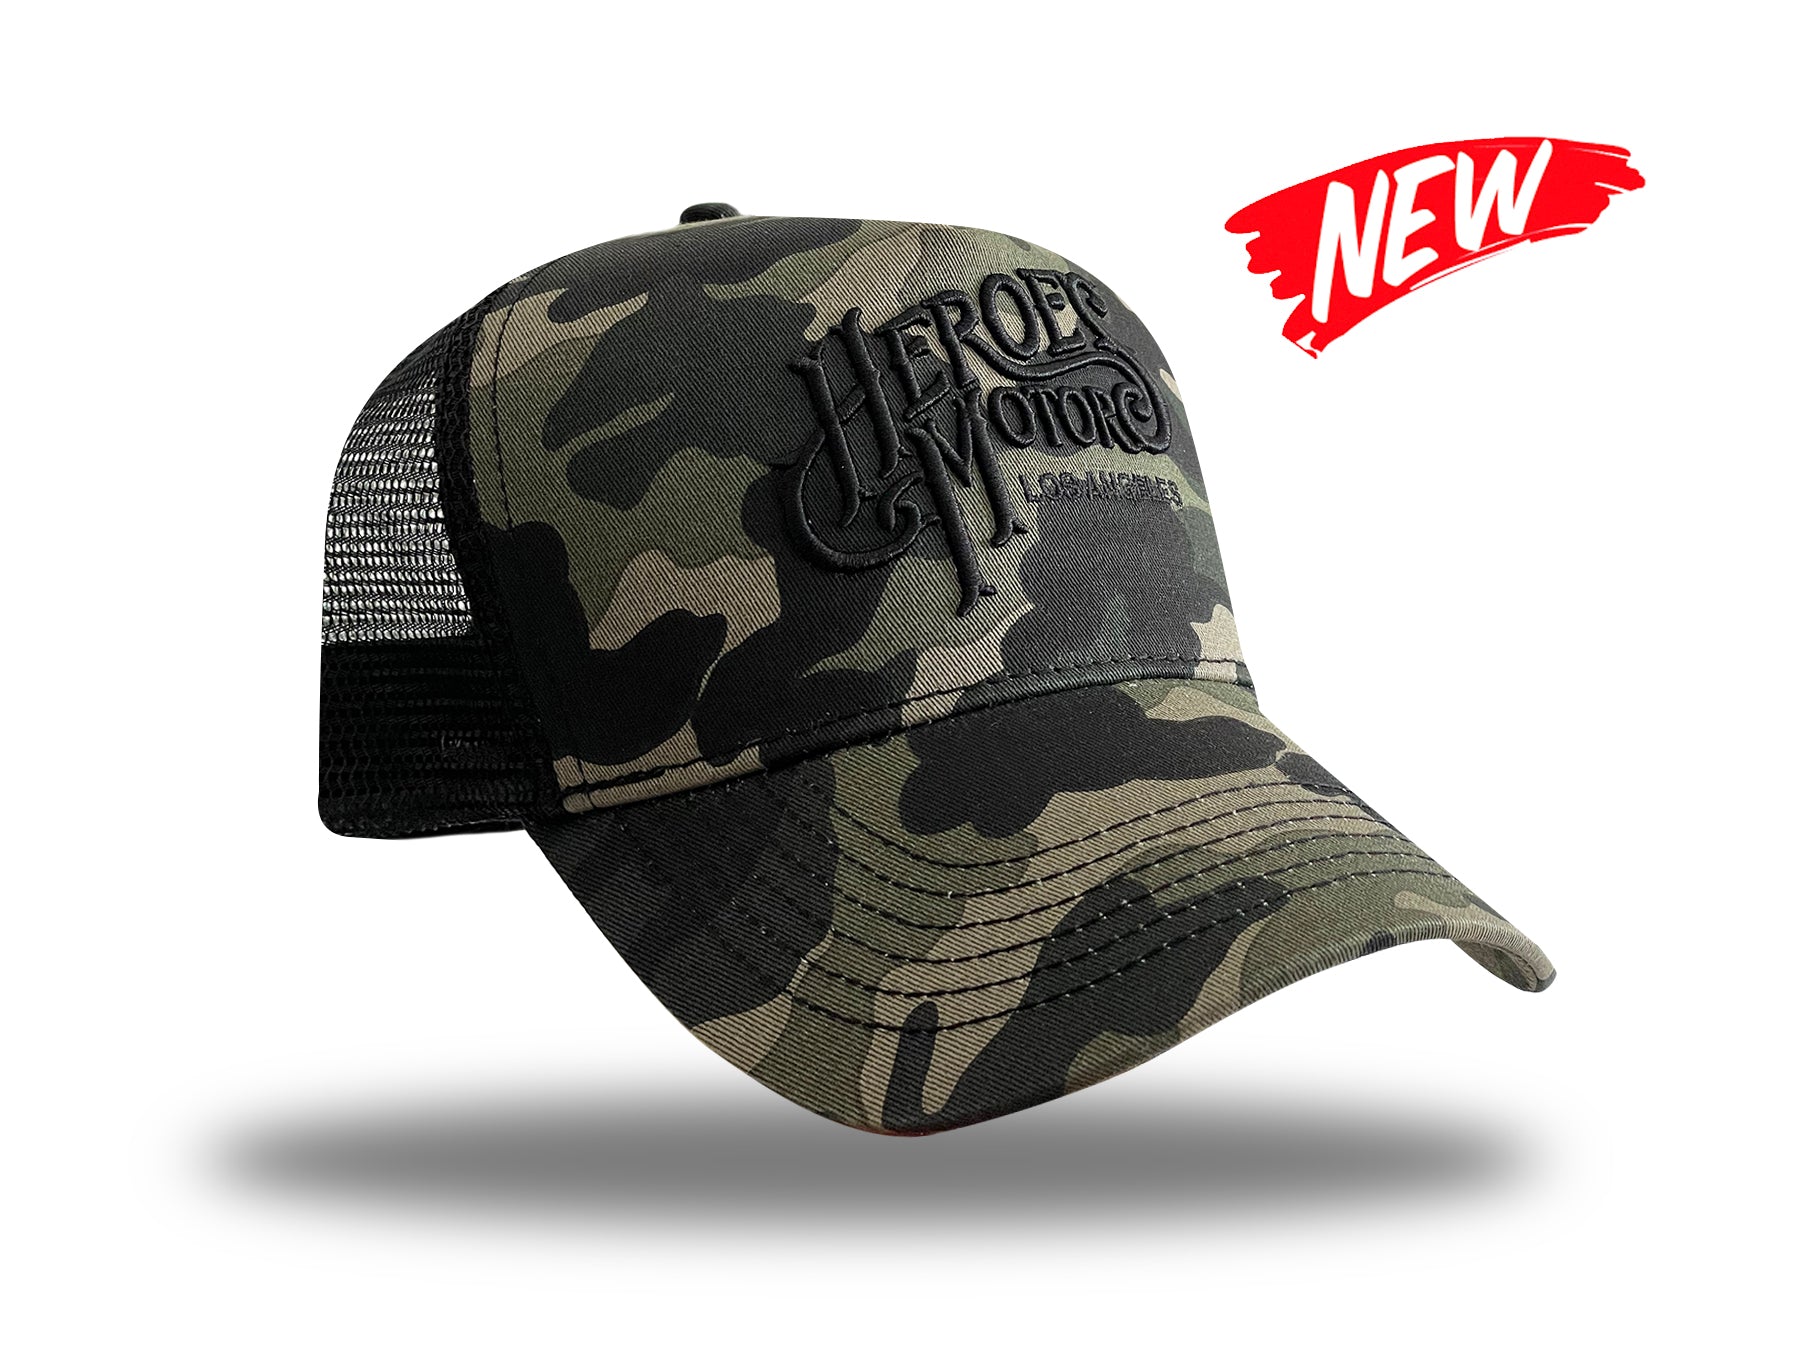 Trucker Hat "3D" HM6001 GrayCamo/Black